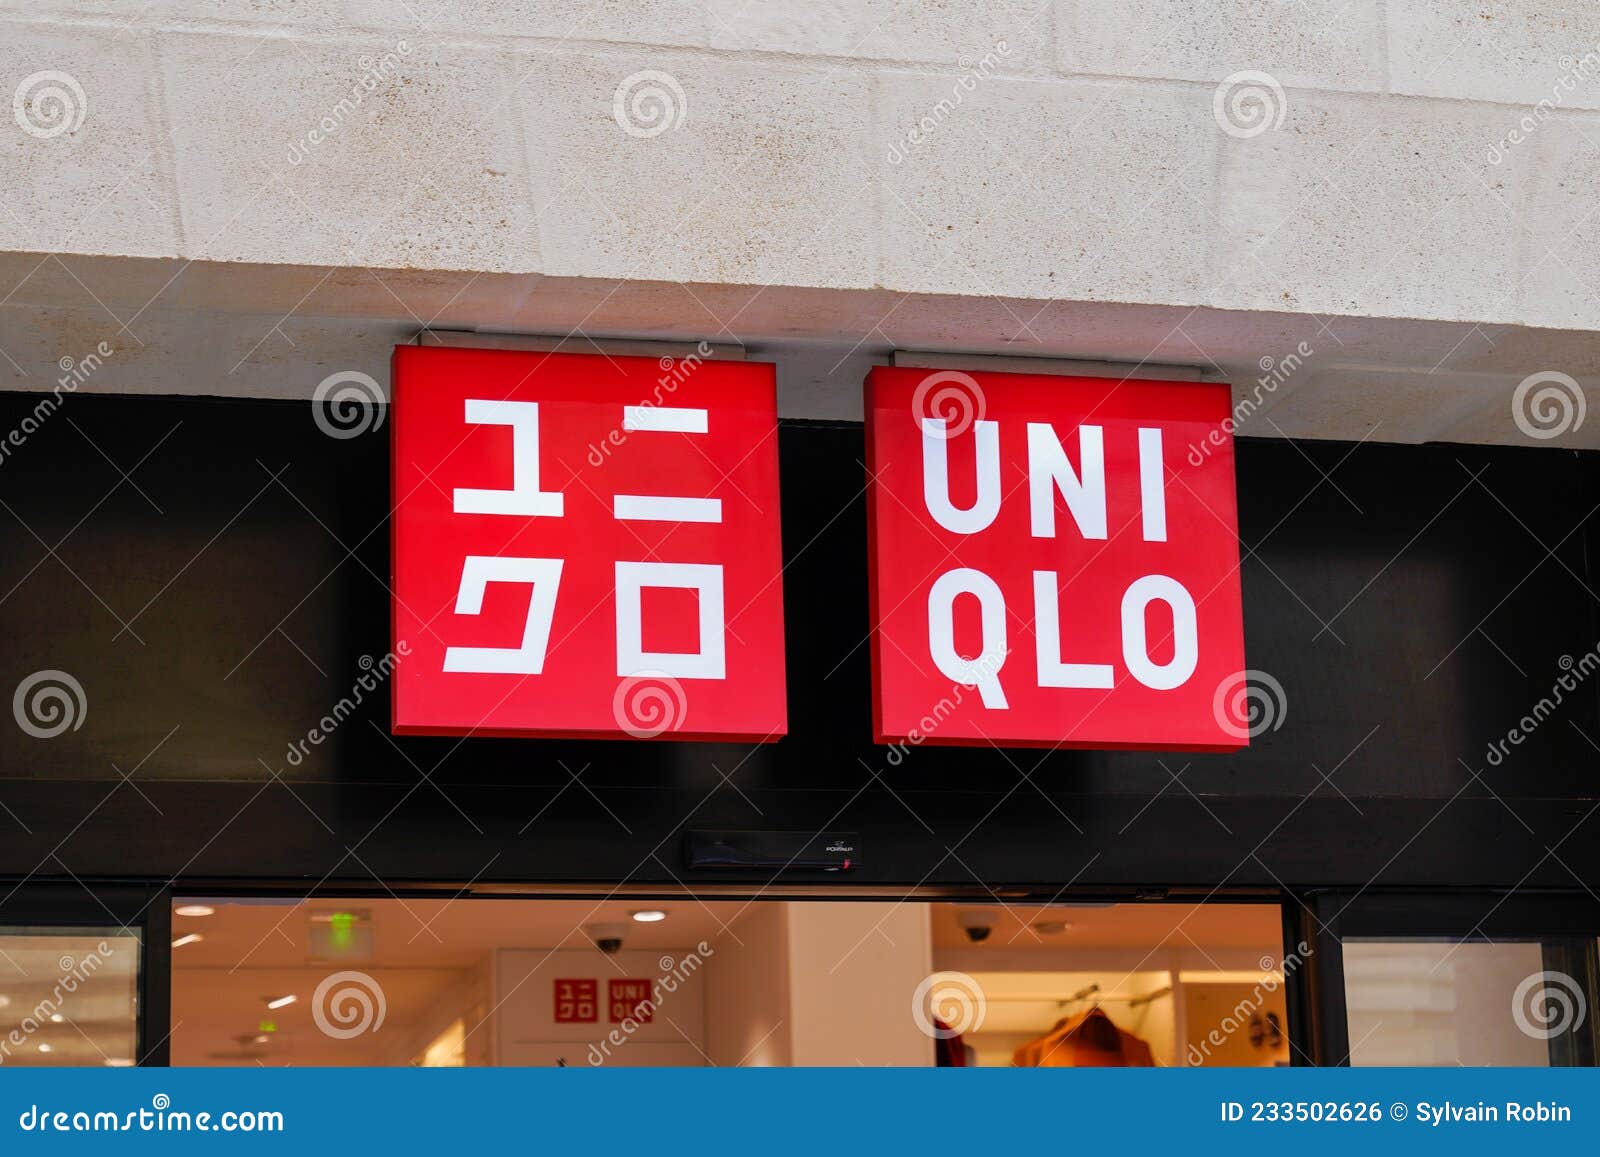 Uniqlo Shop Sign Store Brand Japanese Casual Wear Designer Manufacturer ...